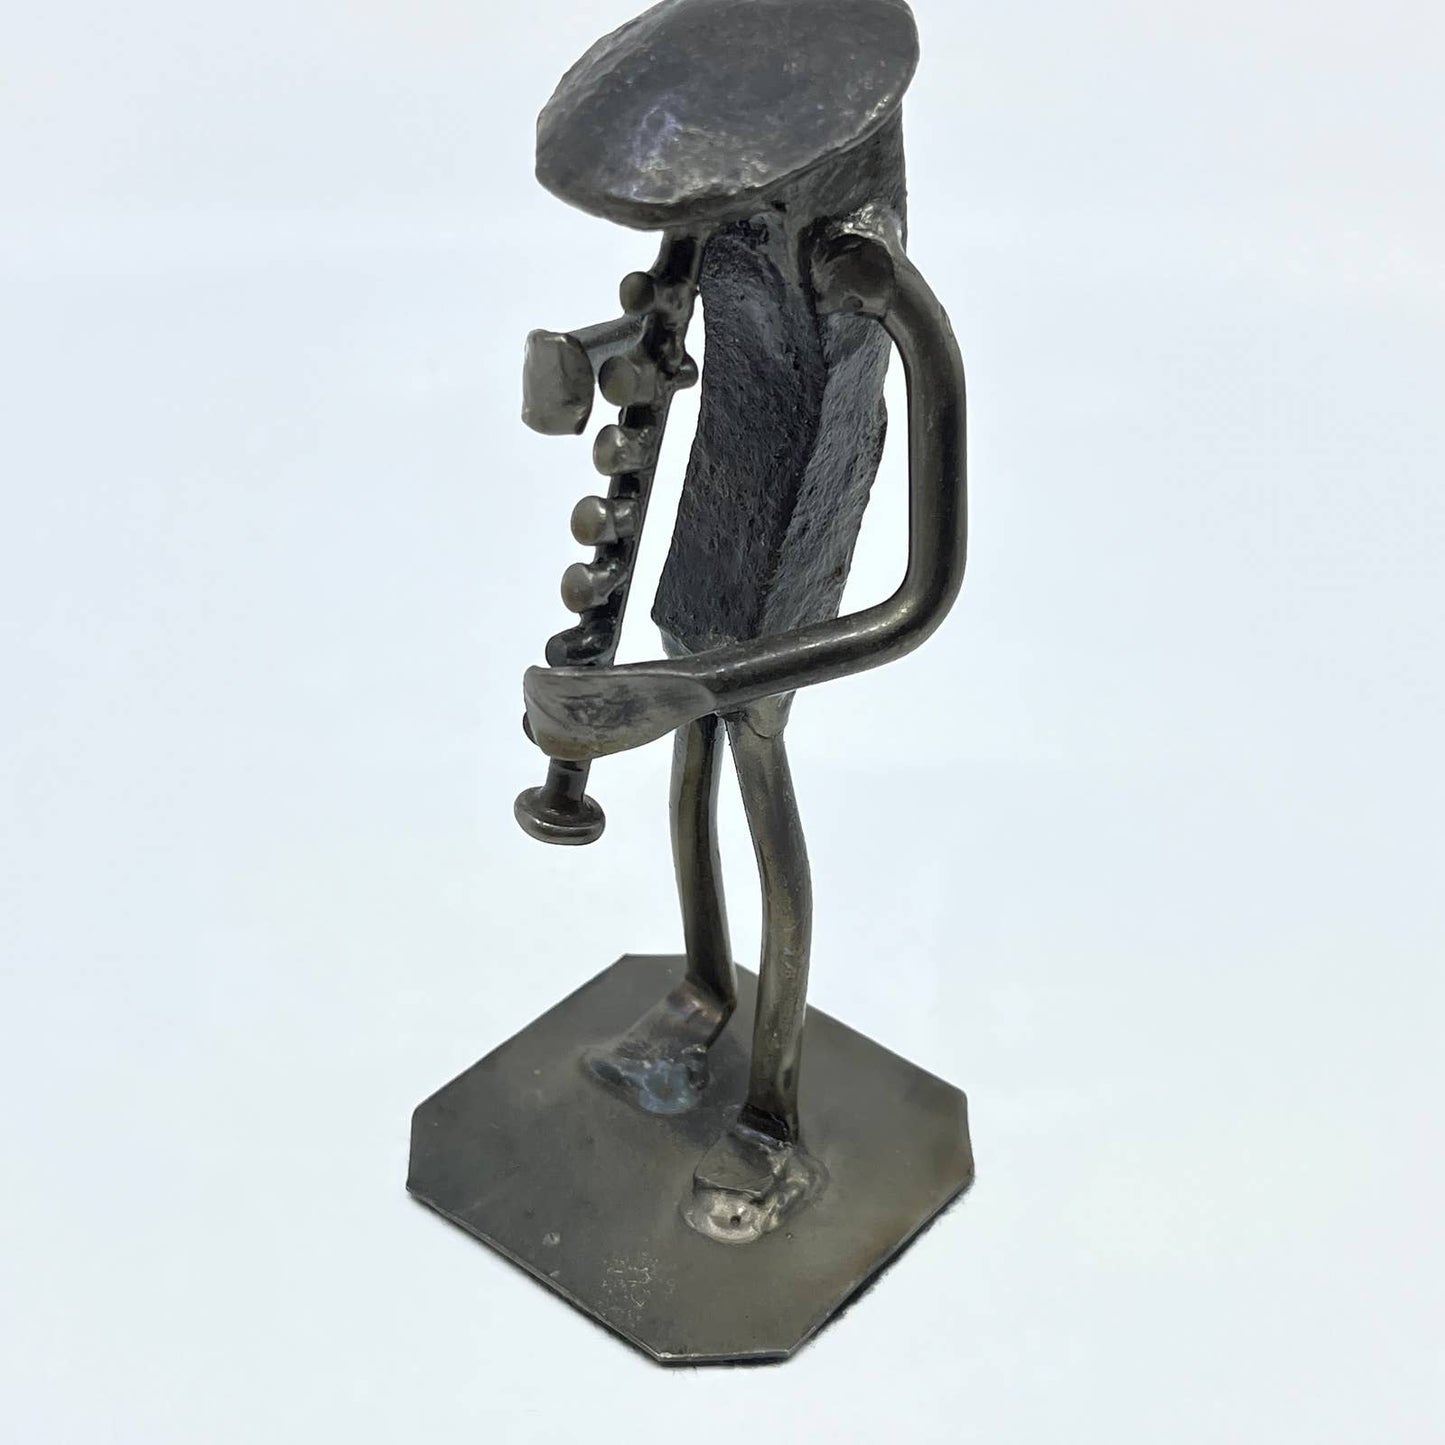 Vintage Jazz Clarinet Player Metal Sculpture Railroad Spike Art 6" TC8